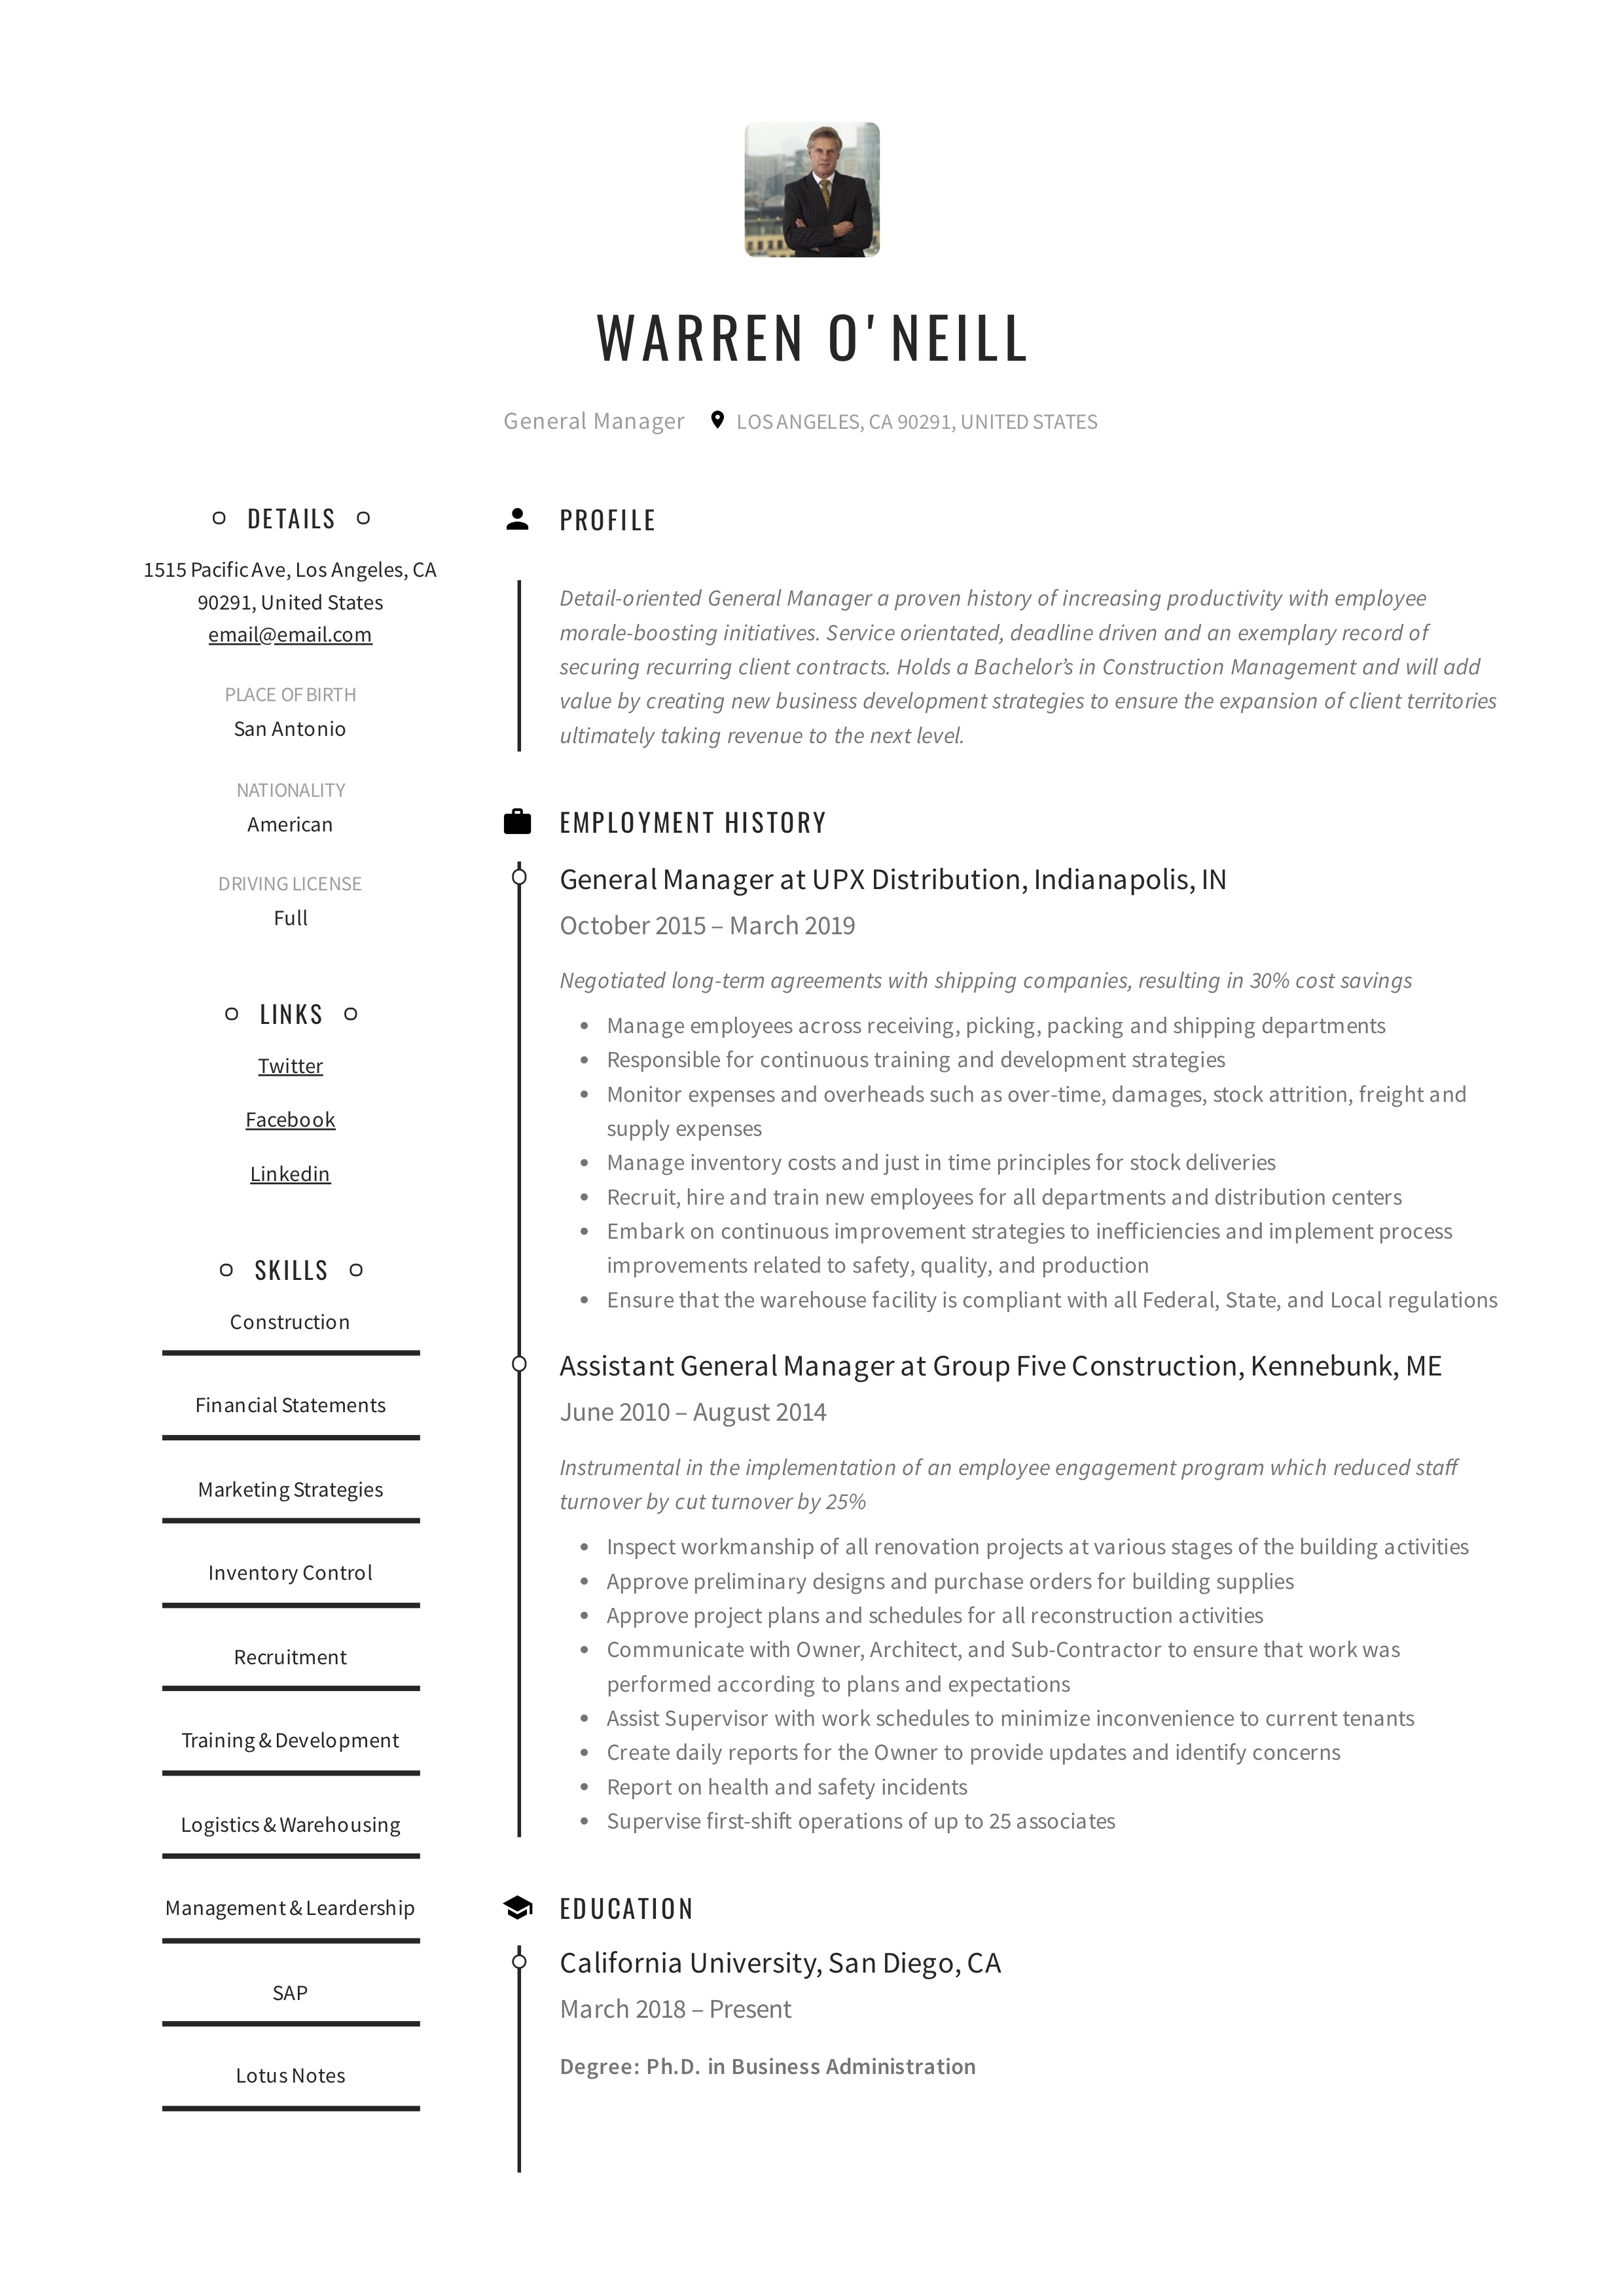 Warren_O_Neill_-_Resume_-_General_Manager (1)